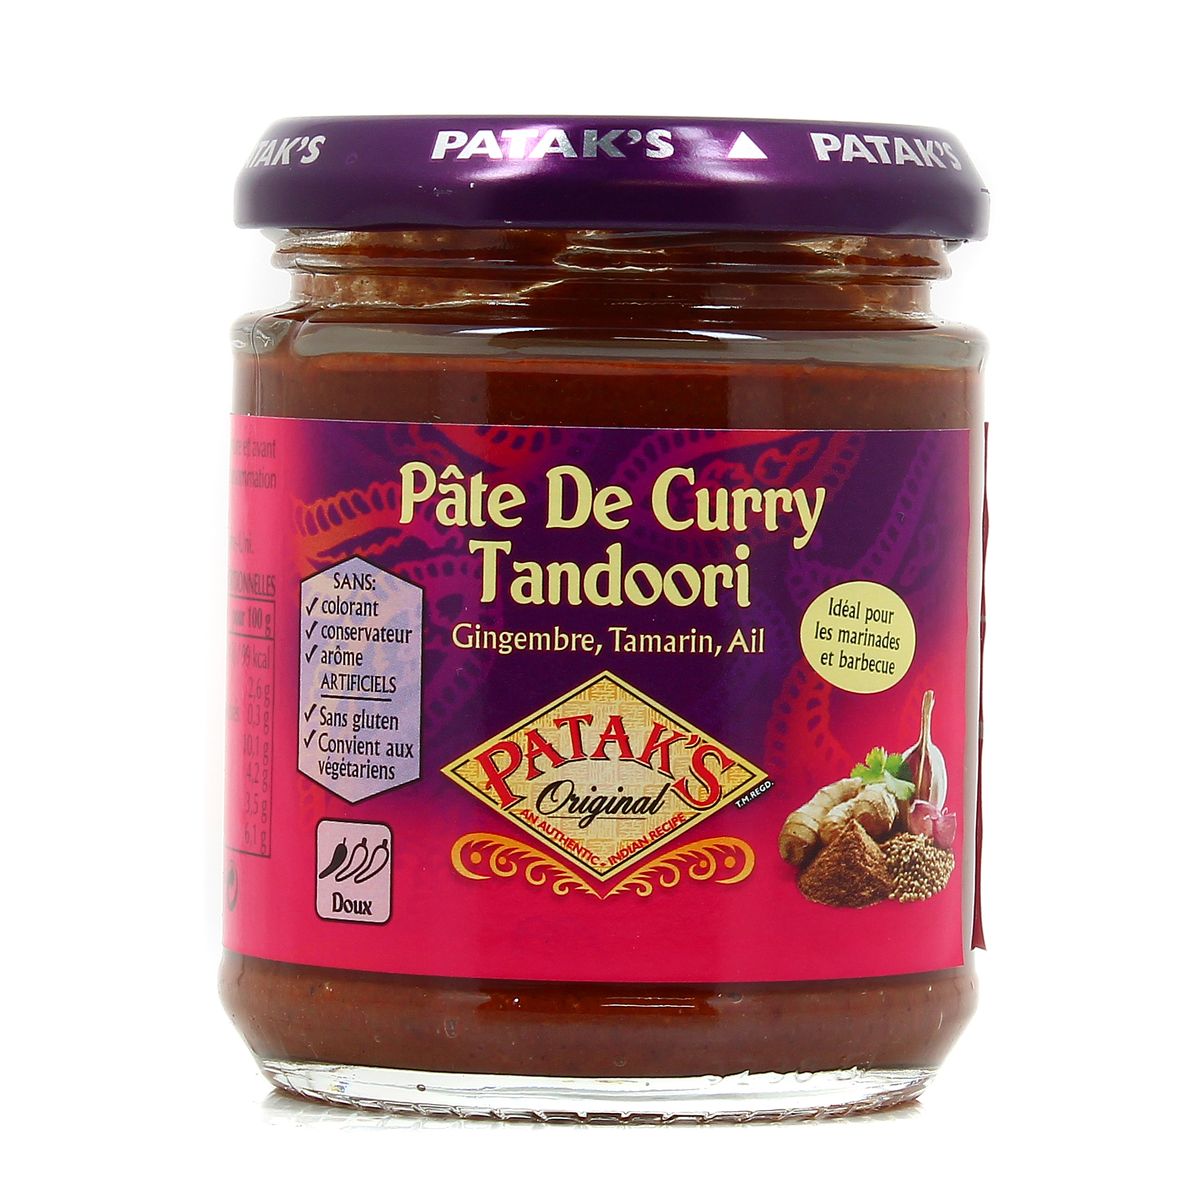 Achat / Vente Promotion Patak's Original Pâte de Curry Tandoori, 165g